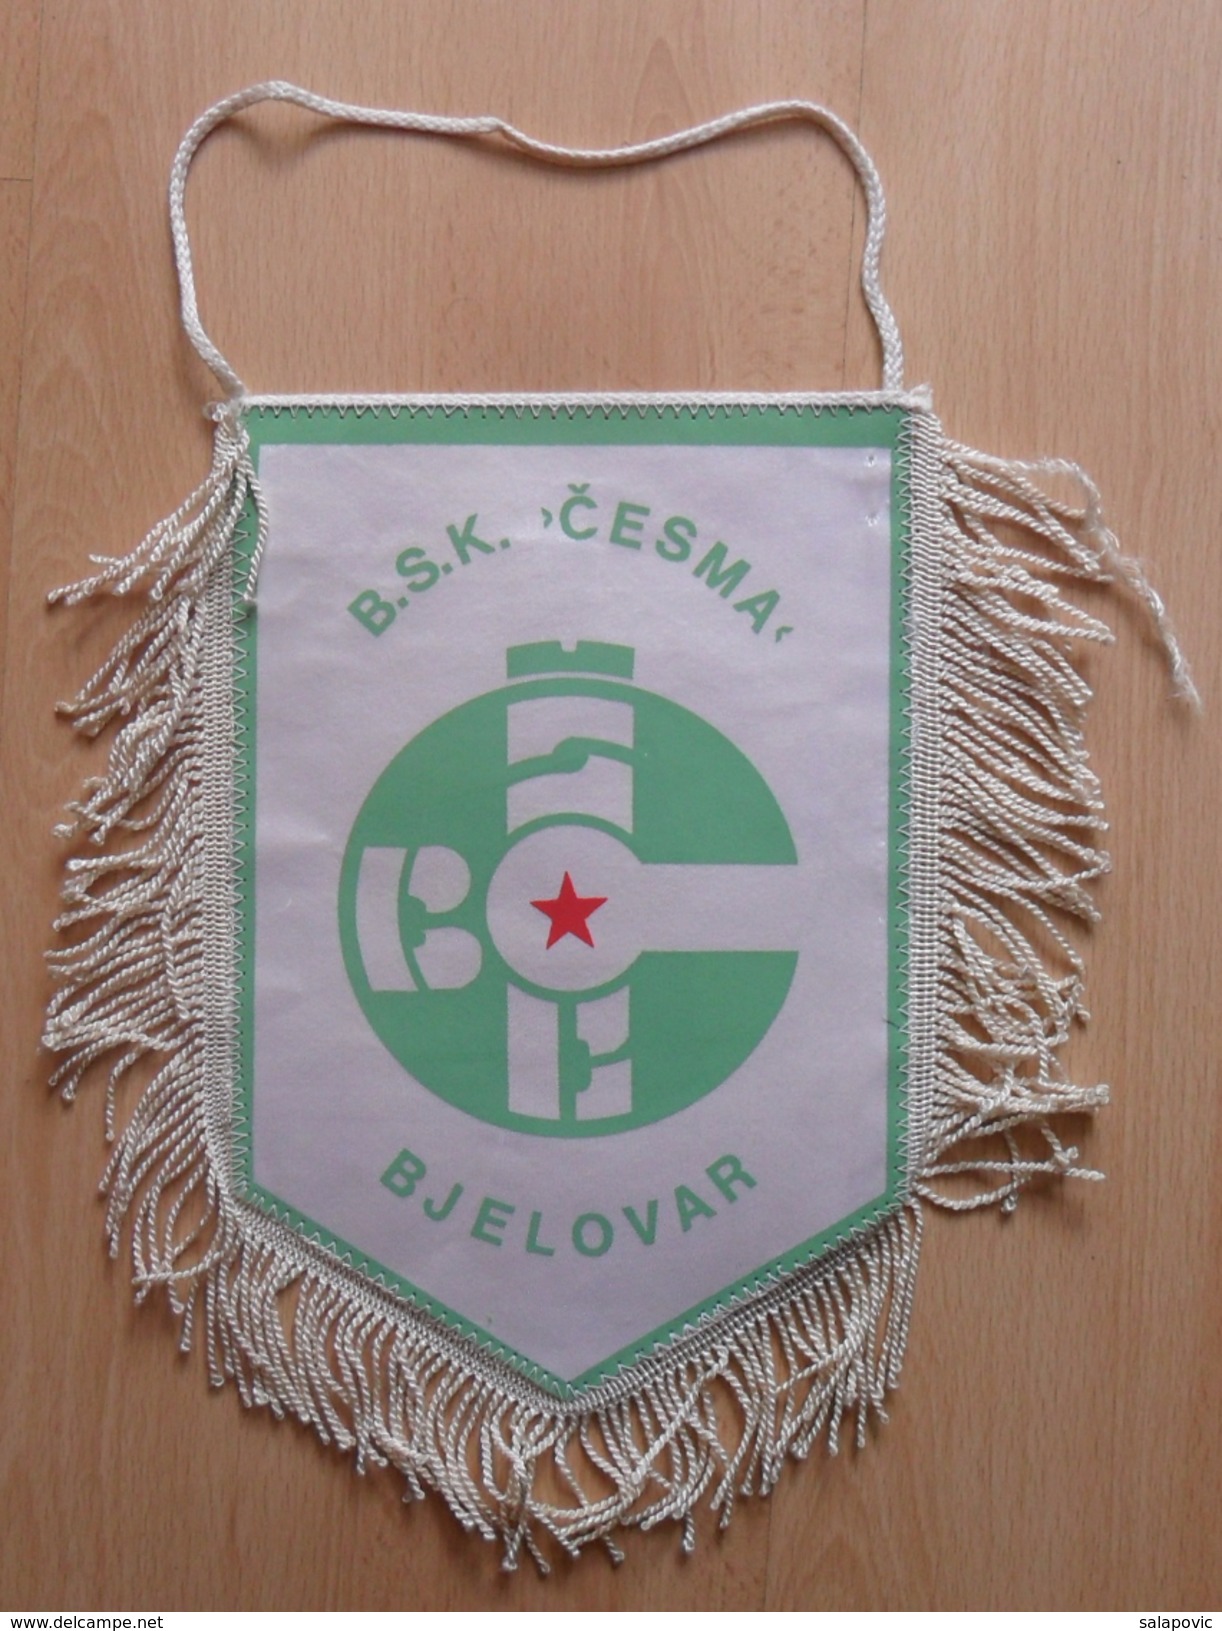 BSK CESMA BJELOVAR Croatia  FOOTBALL CLUB, SOCCER / FUTBOL / CALCIO  OLD PENNANT, SPORTS FLAG - Abbigliamento, Souvenirs & Varie